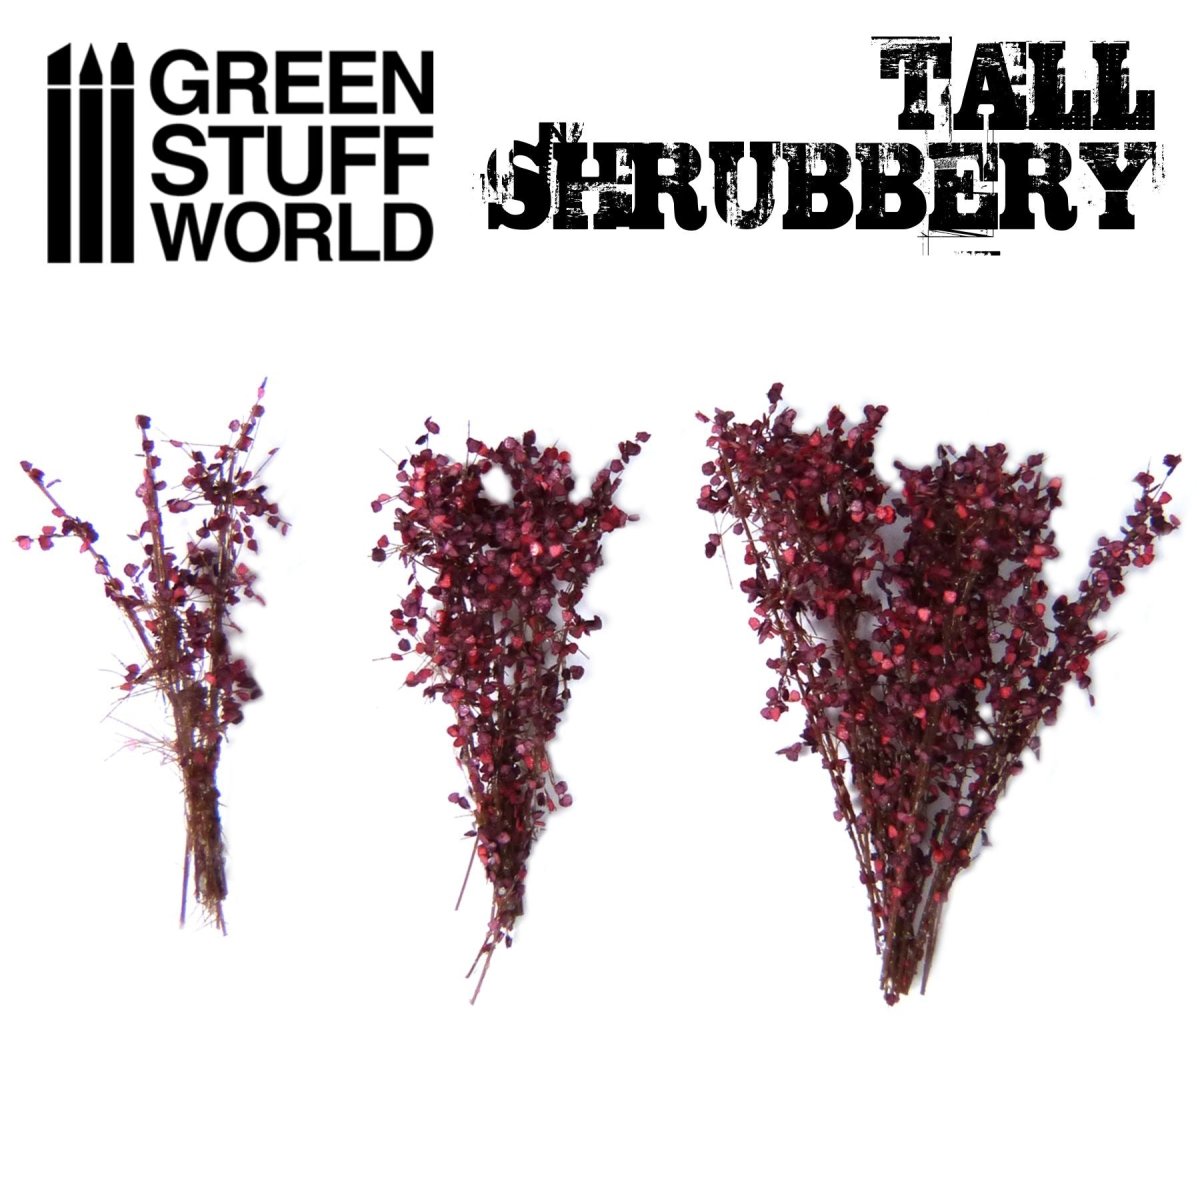 Tall Shrubbery - Autumn Purple 4CM tall - Green Stuff World - 1 blister pack - Gootzy Gaming